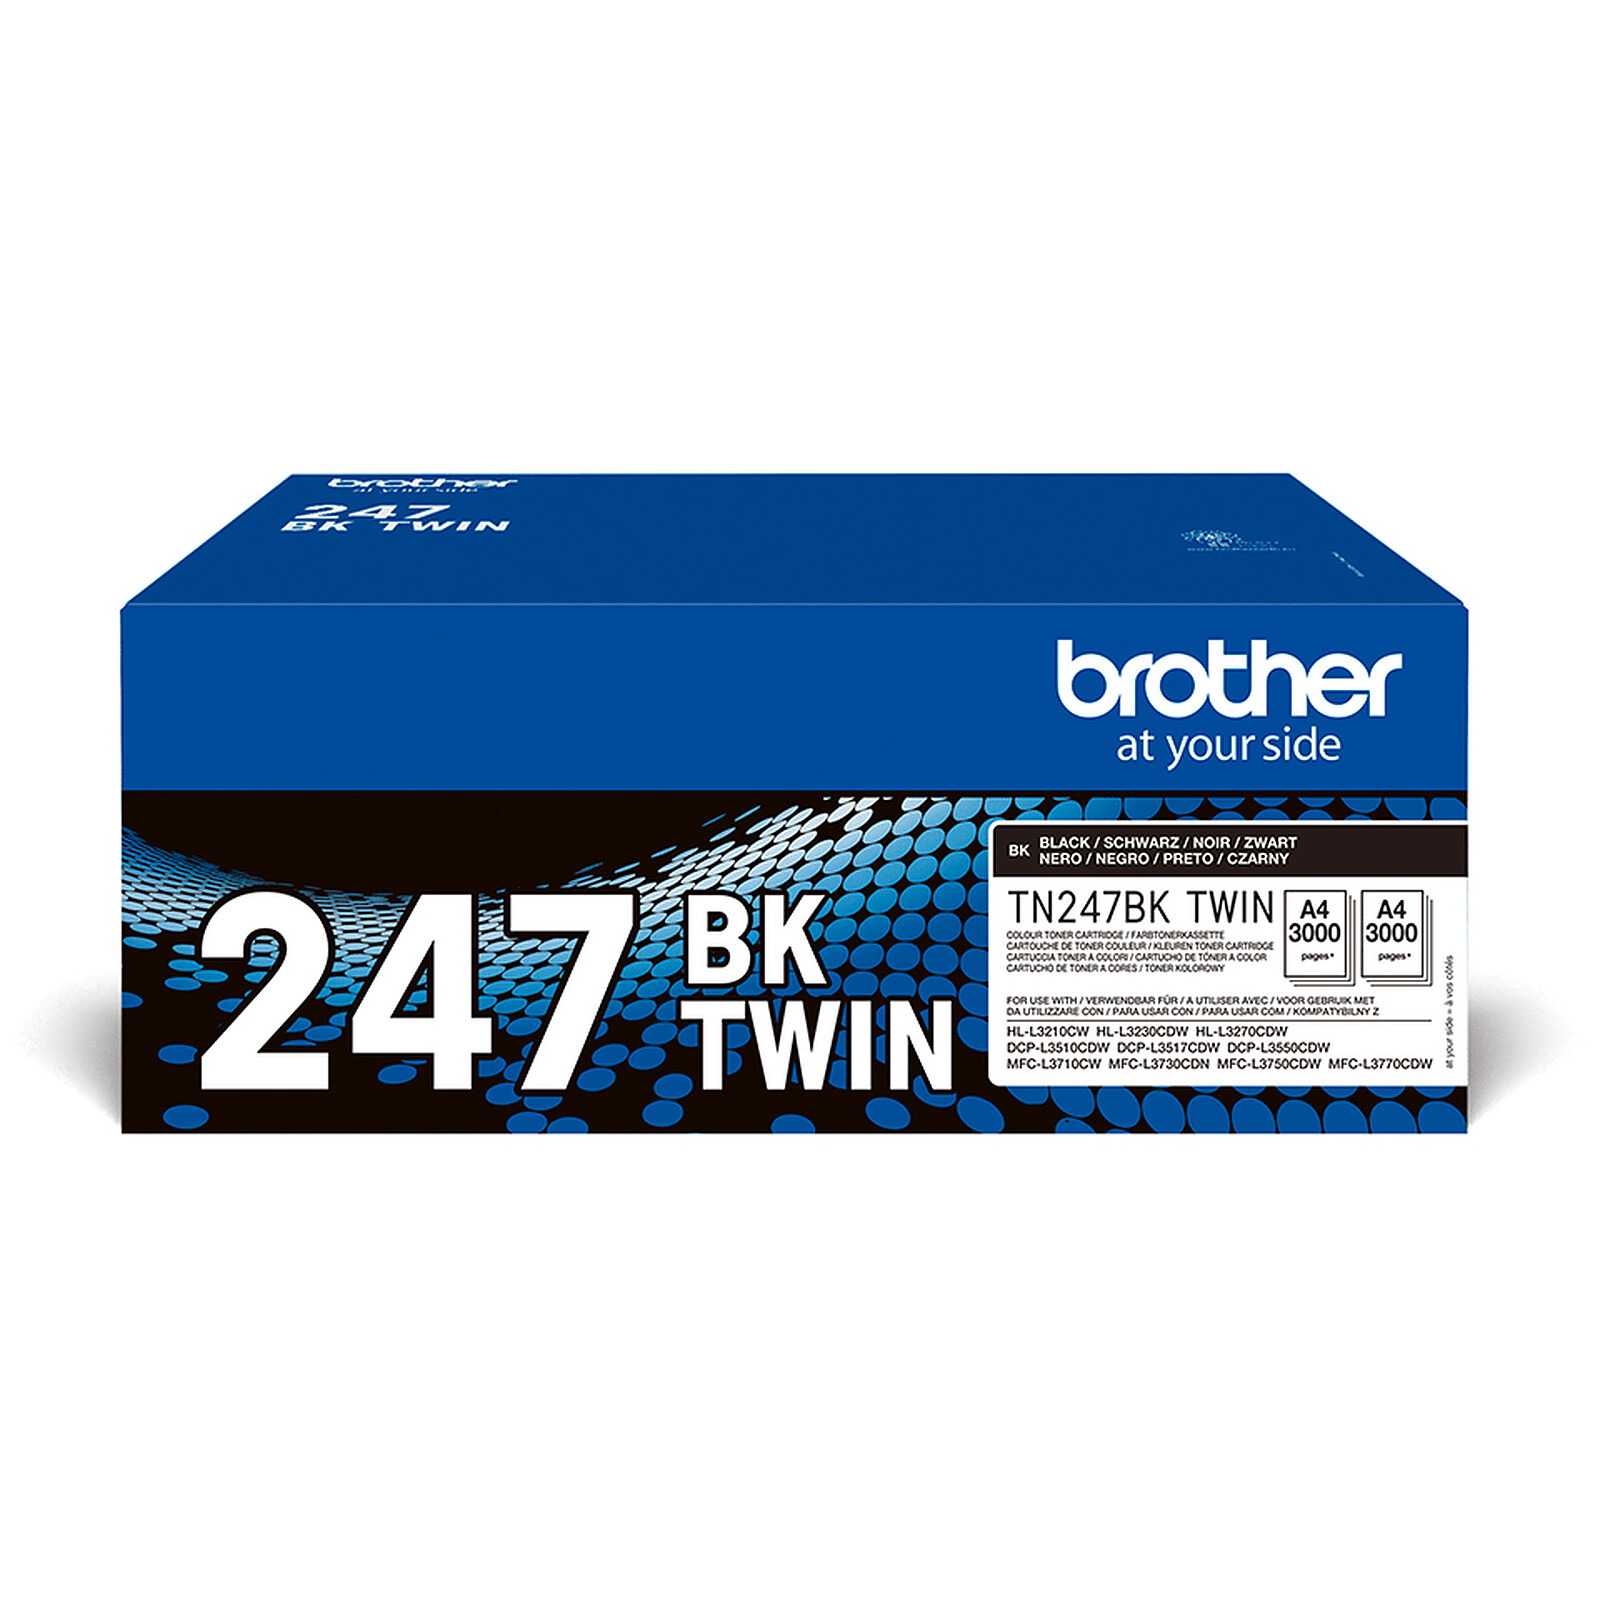 TN2320TWIN, Laser Printer Supplies